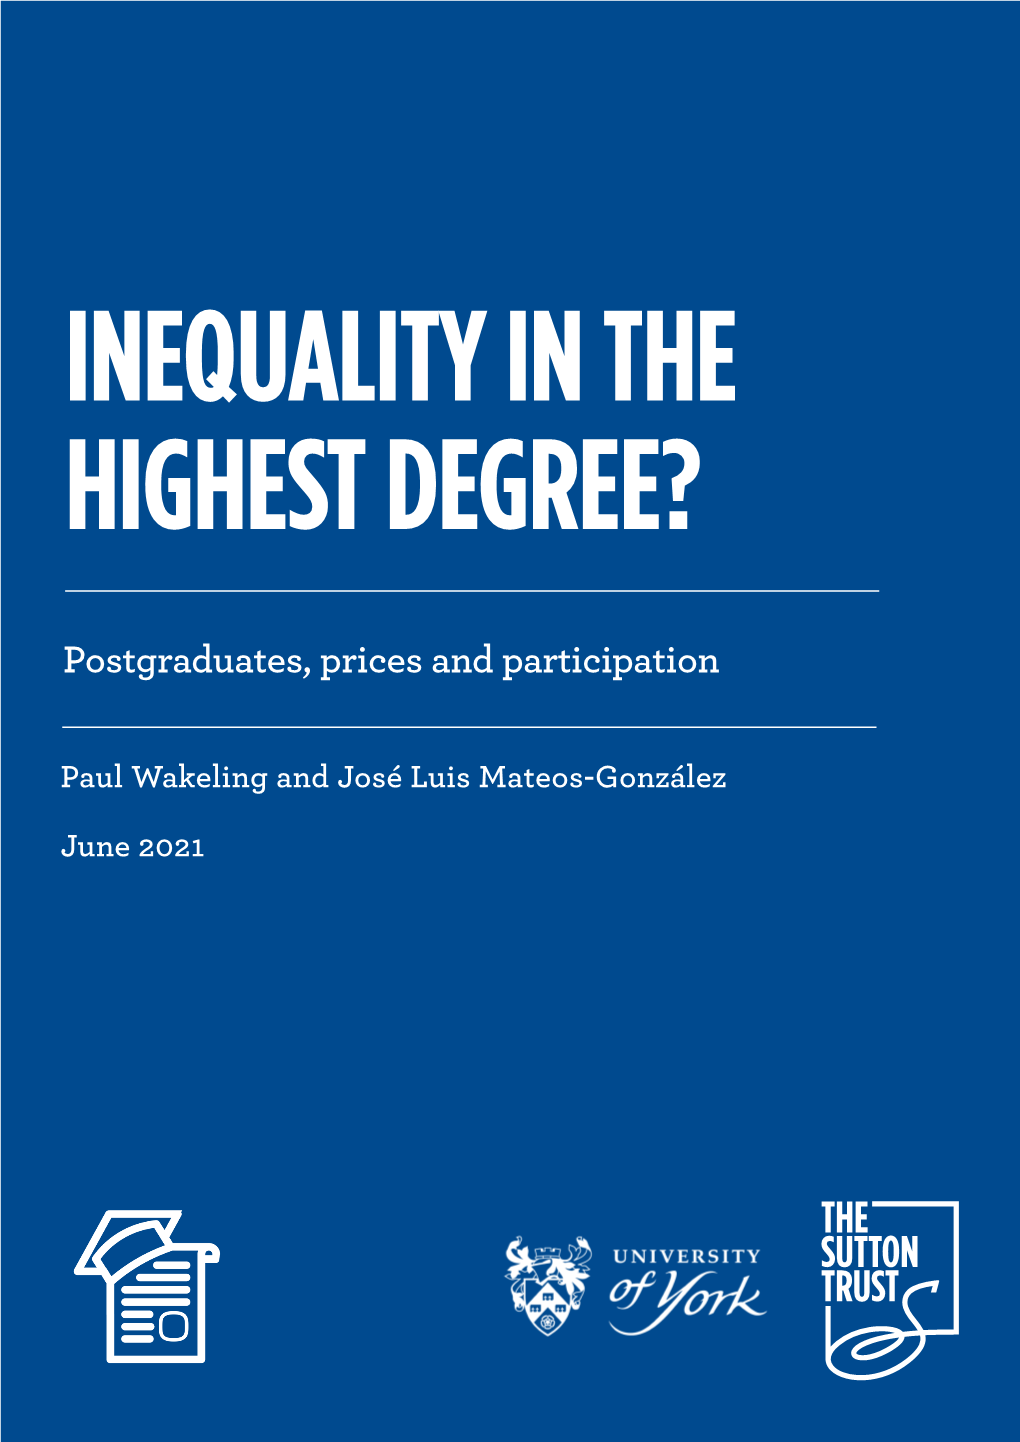 Postgraduates, Prices and Participation